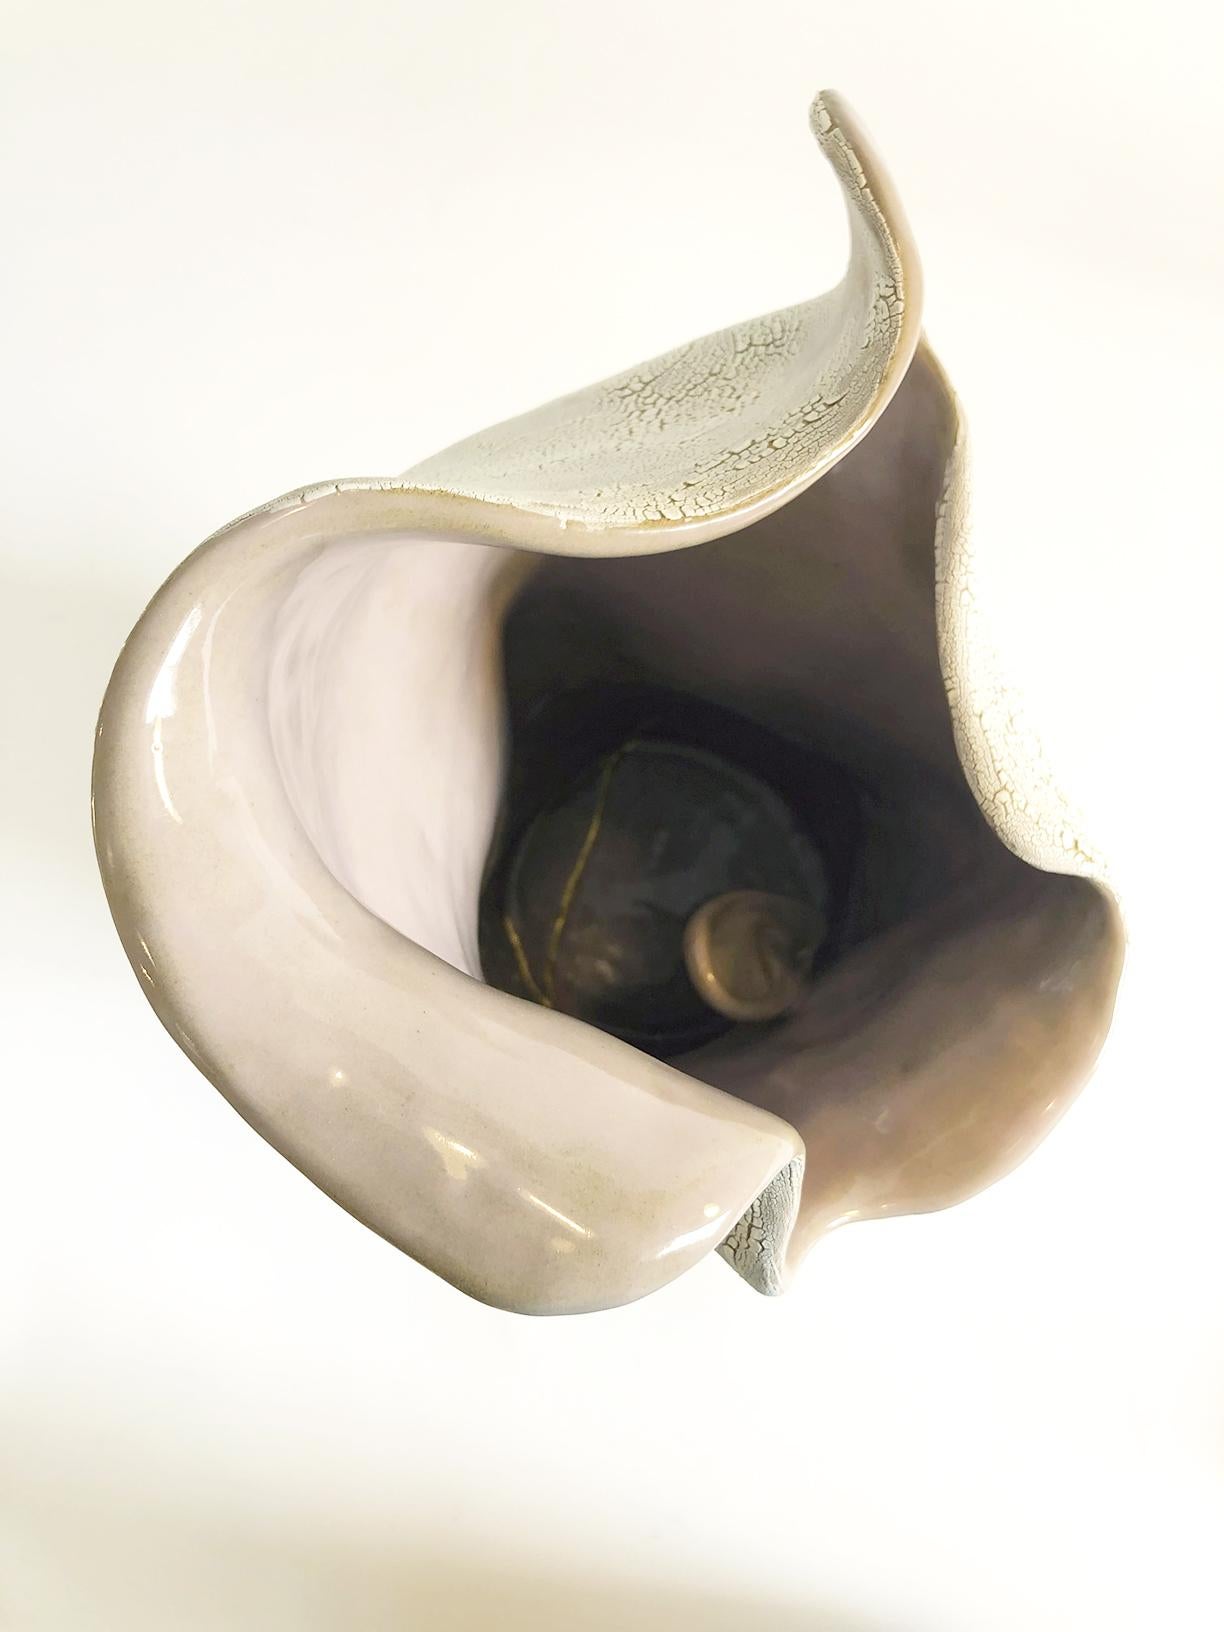 Visceral V. Glaze ceramic sculpture - Gray Abstract Sculpture by Magda Von Hanau